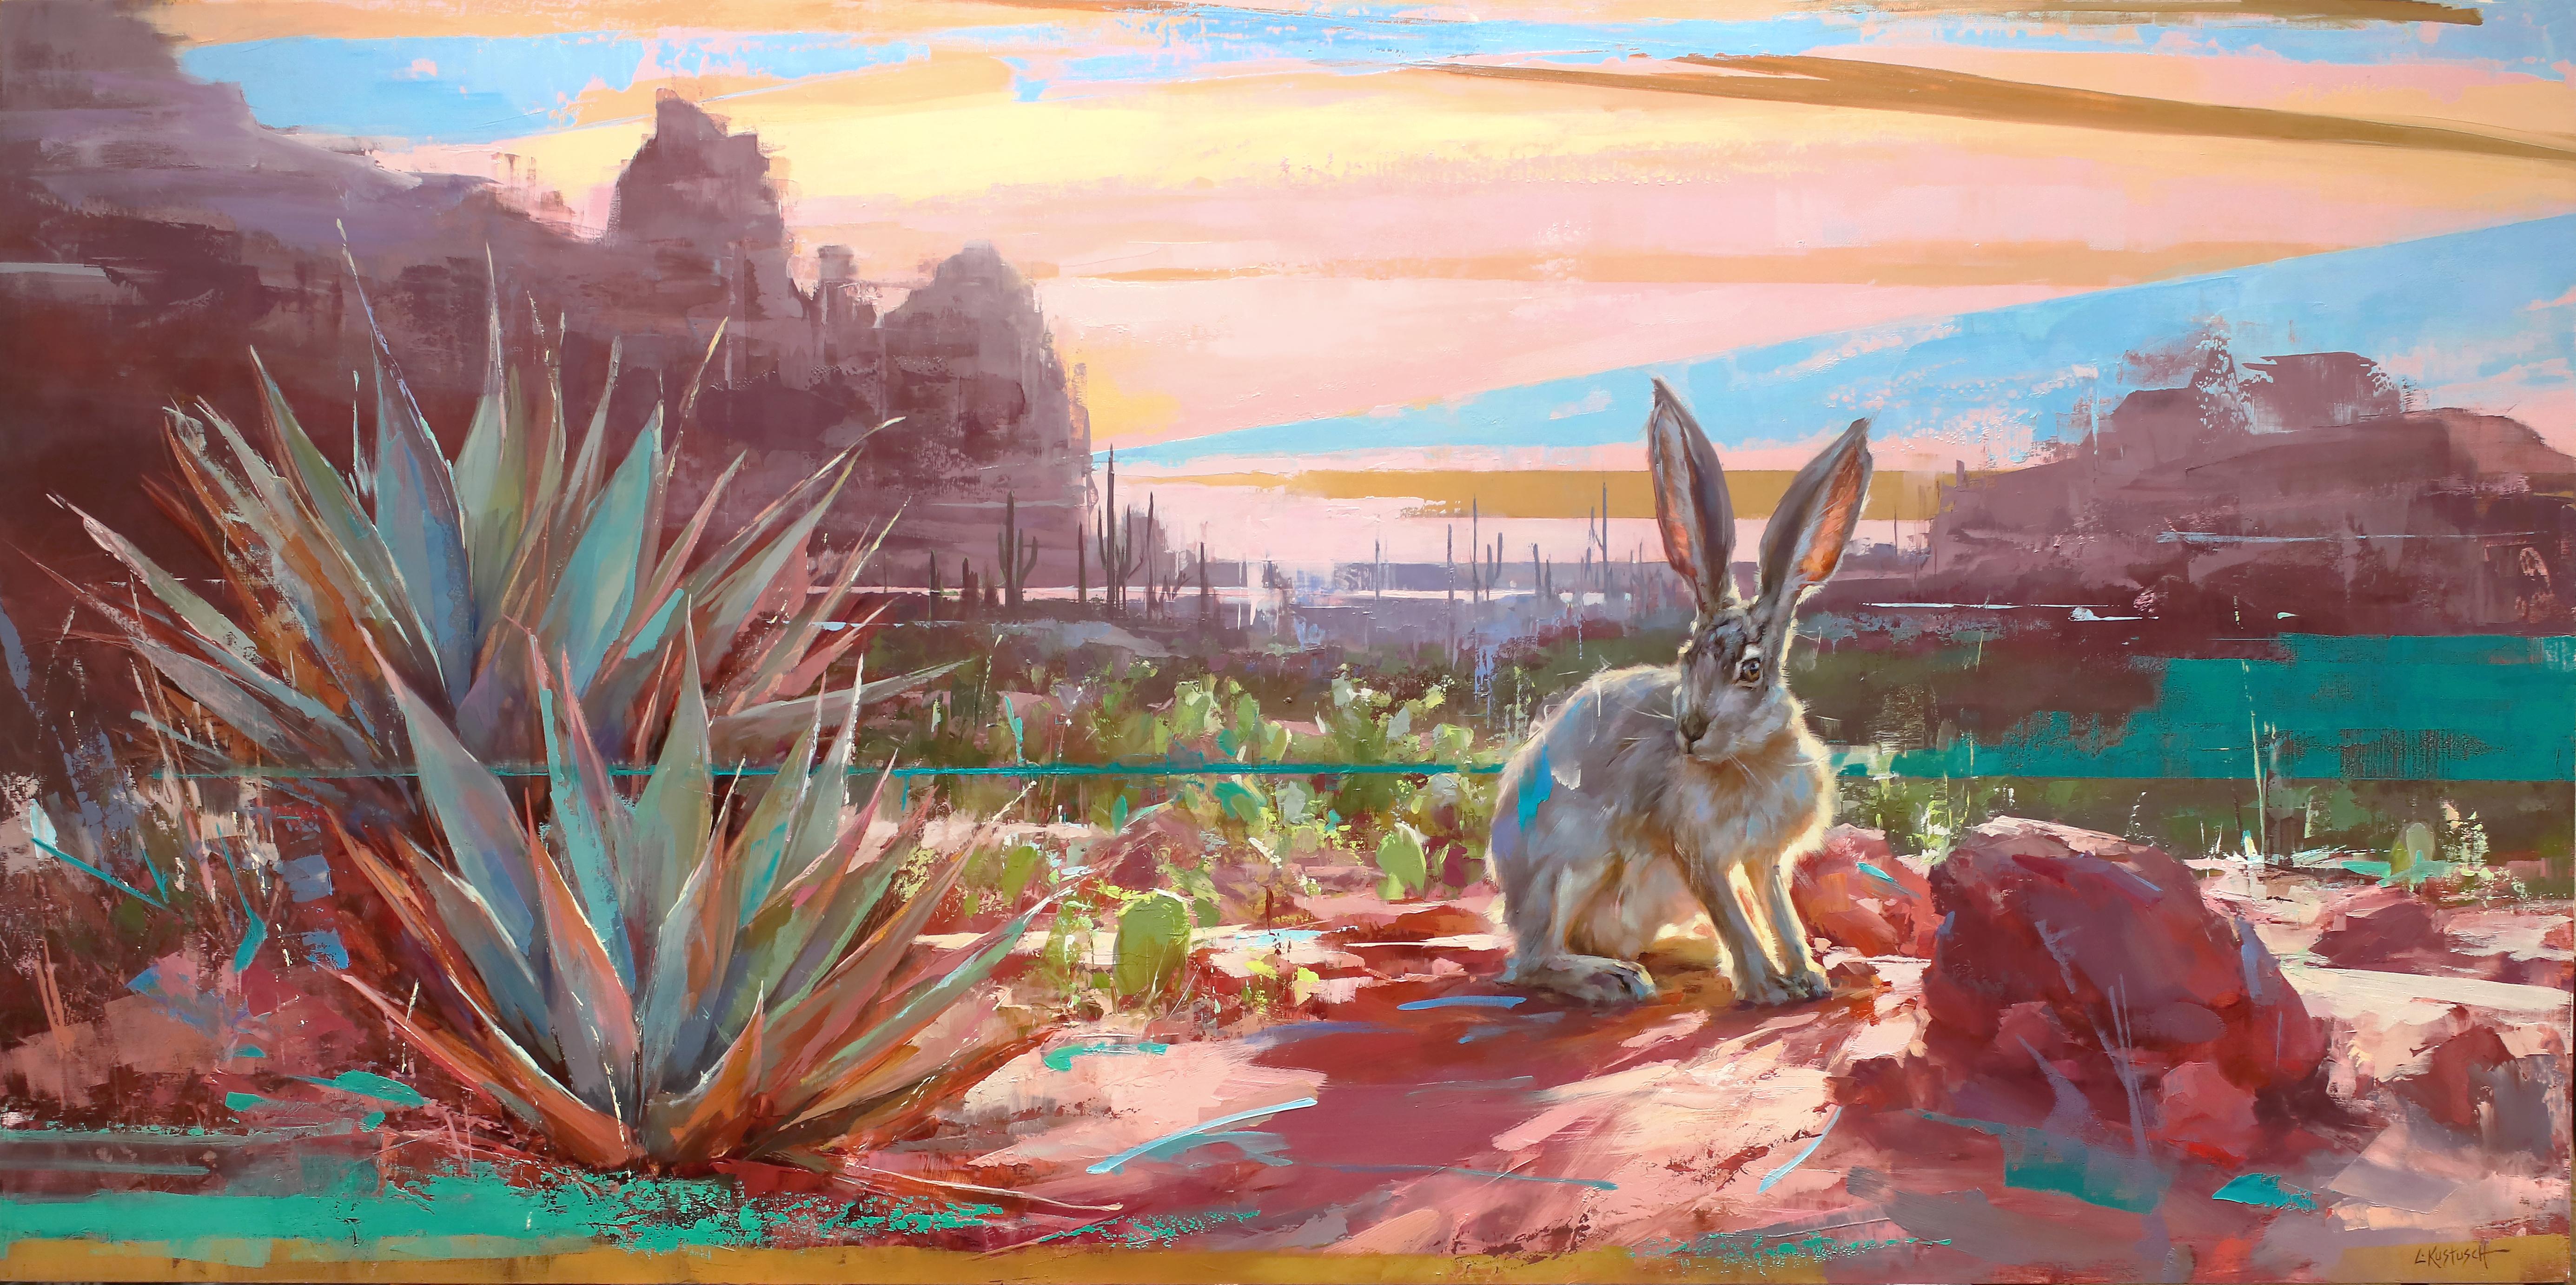 Lindsey Kustusch Figurative Painting - "Summer in the High Desert" Original Oil Painting of a Landscape & Jackrabbit